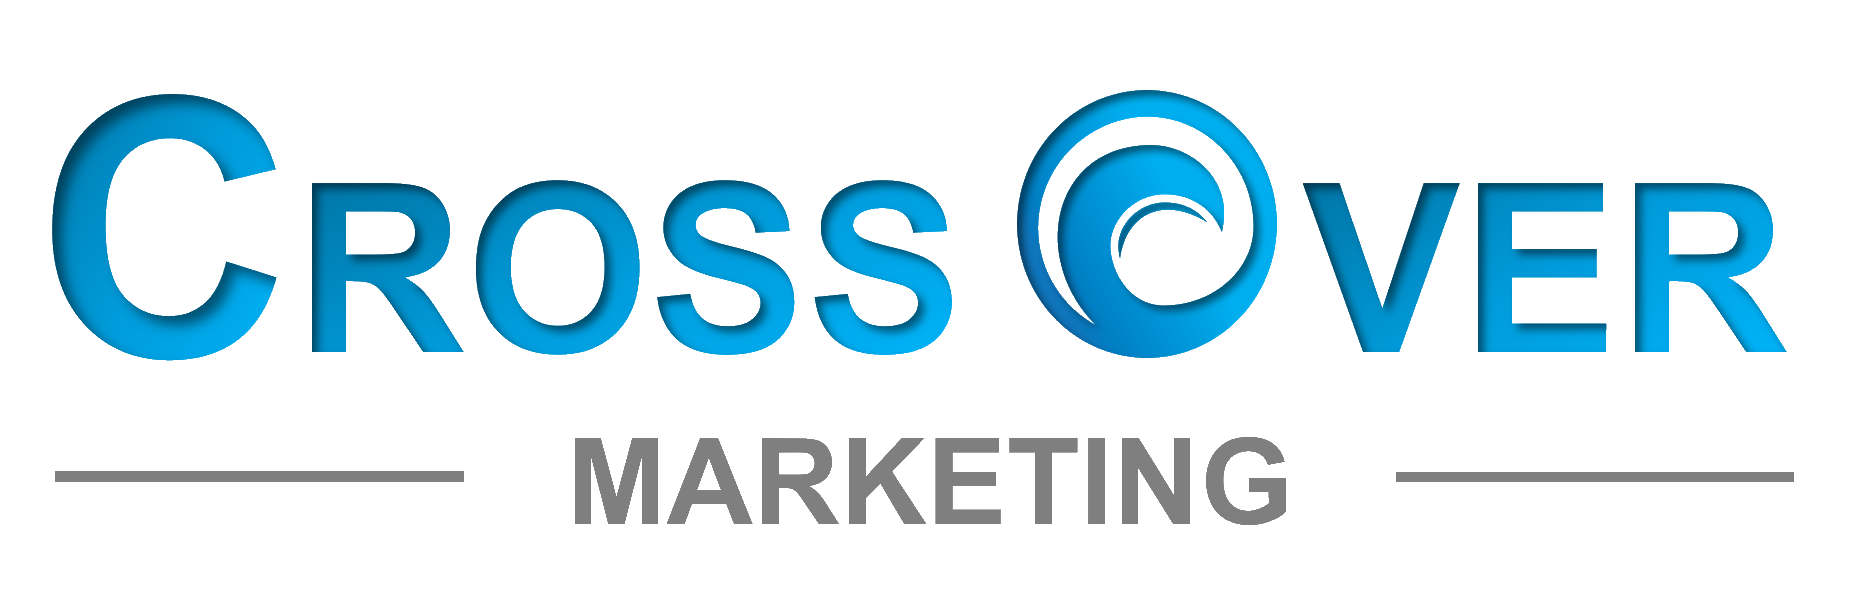 cross over marketing logo